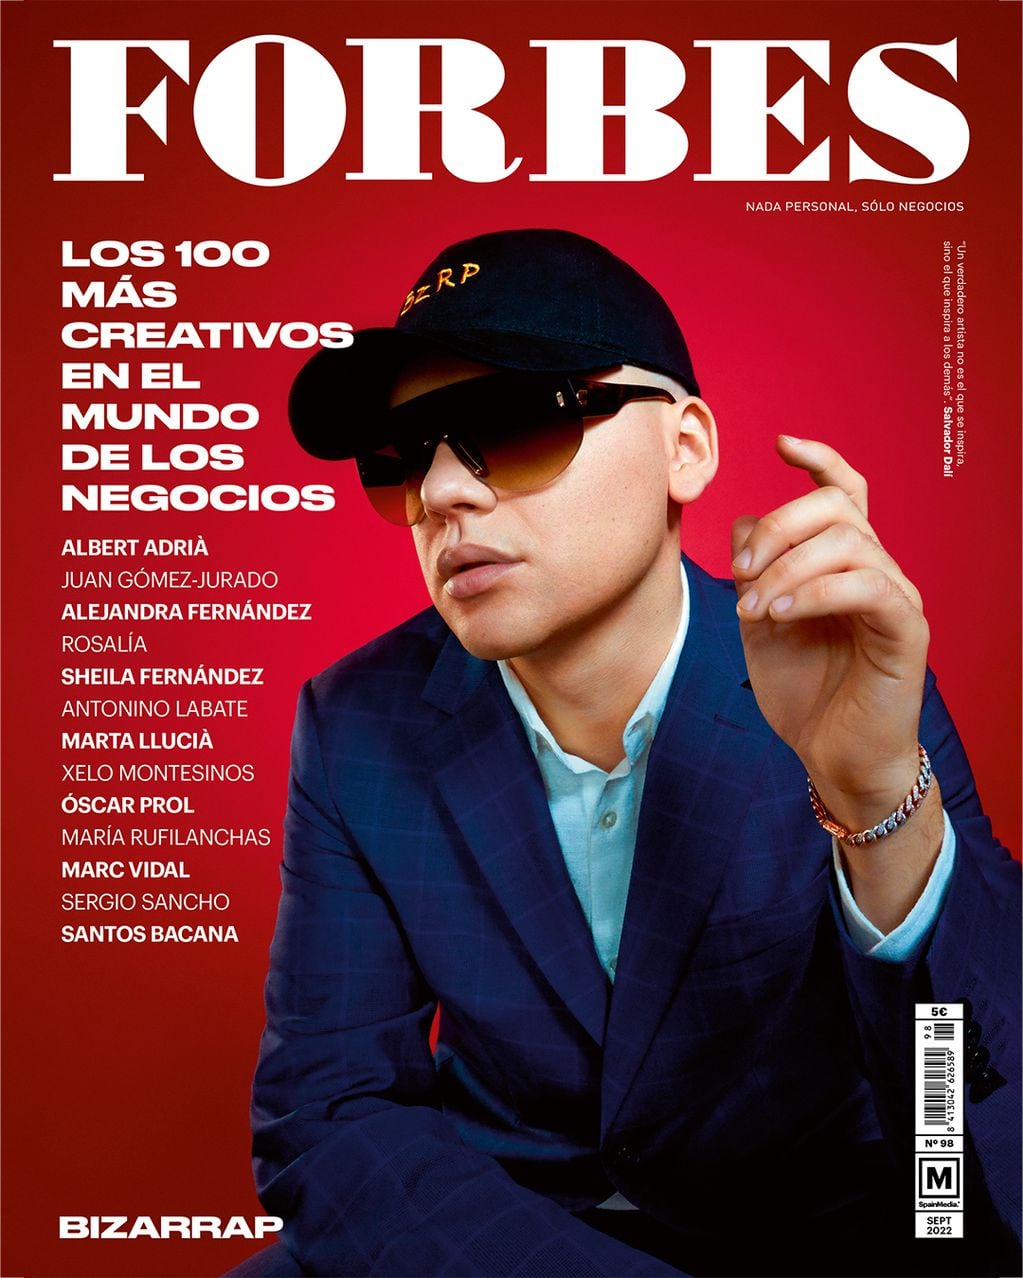 Bizarrap en la portada de Forbes